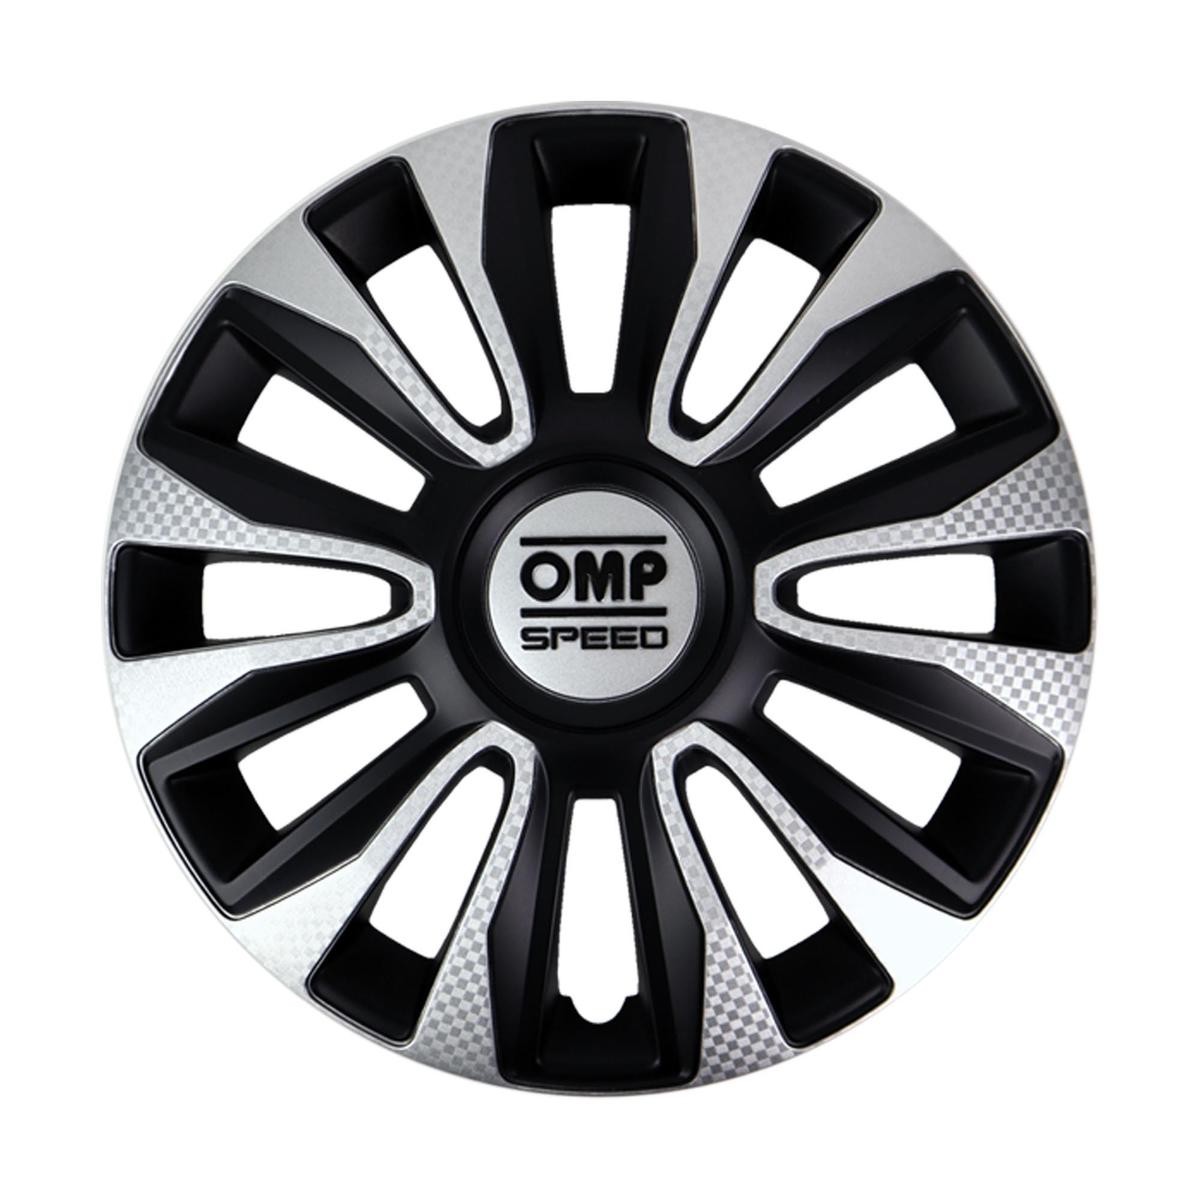 OMP OMPS07011422 Car wheel trims OPEL Corsa D Hatchback (S07) 14 Inch black/silver, Carbon